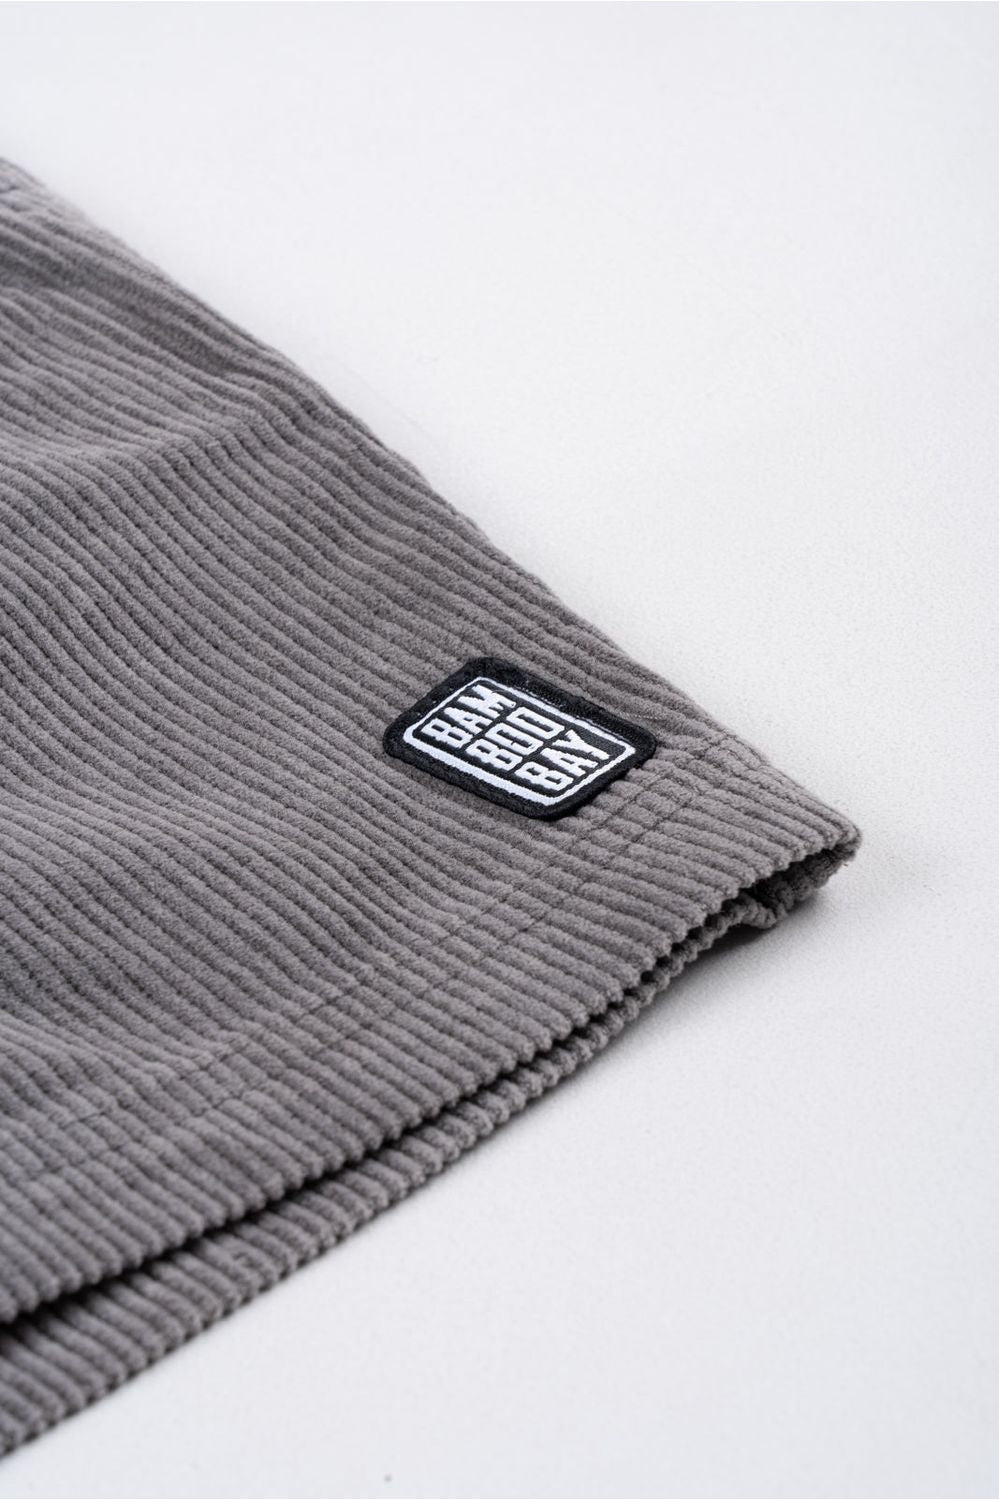 Bamboobay grey cord shorts front stiitched logo